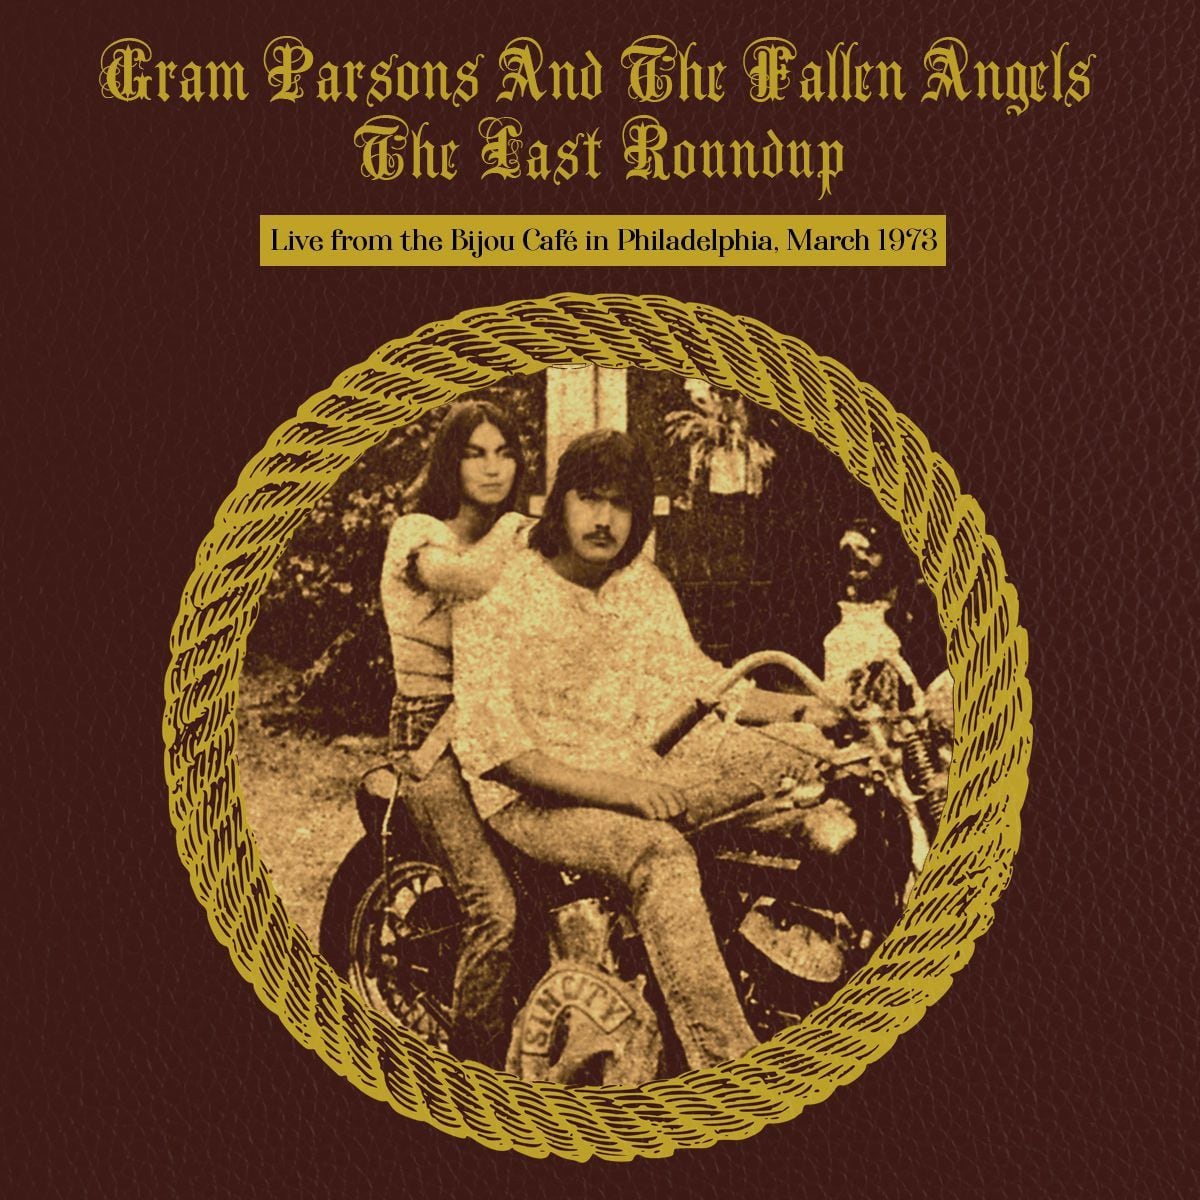 Gram Parsons' lost Philadelphia concert album is being released on 